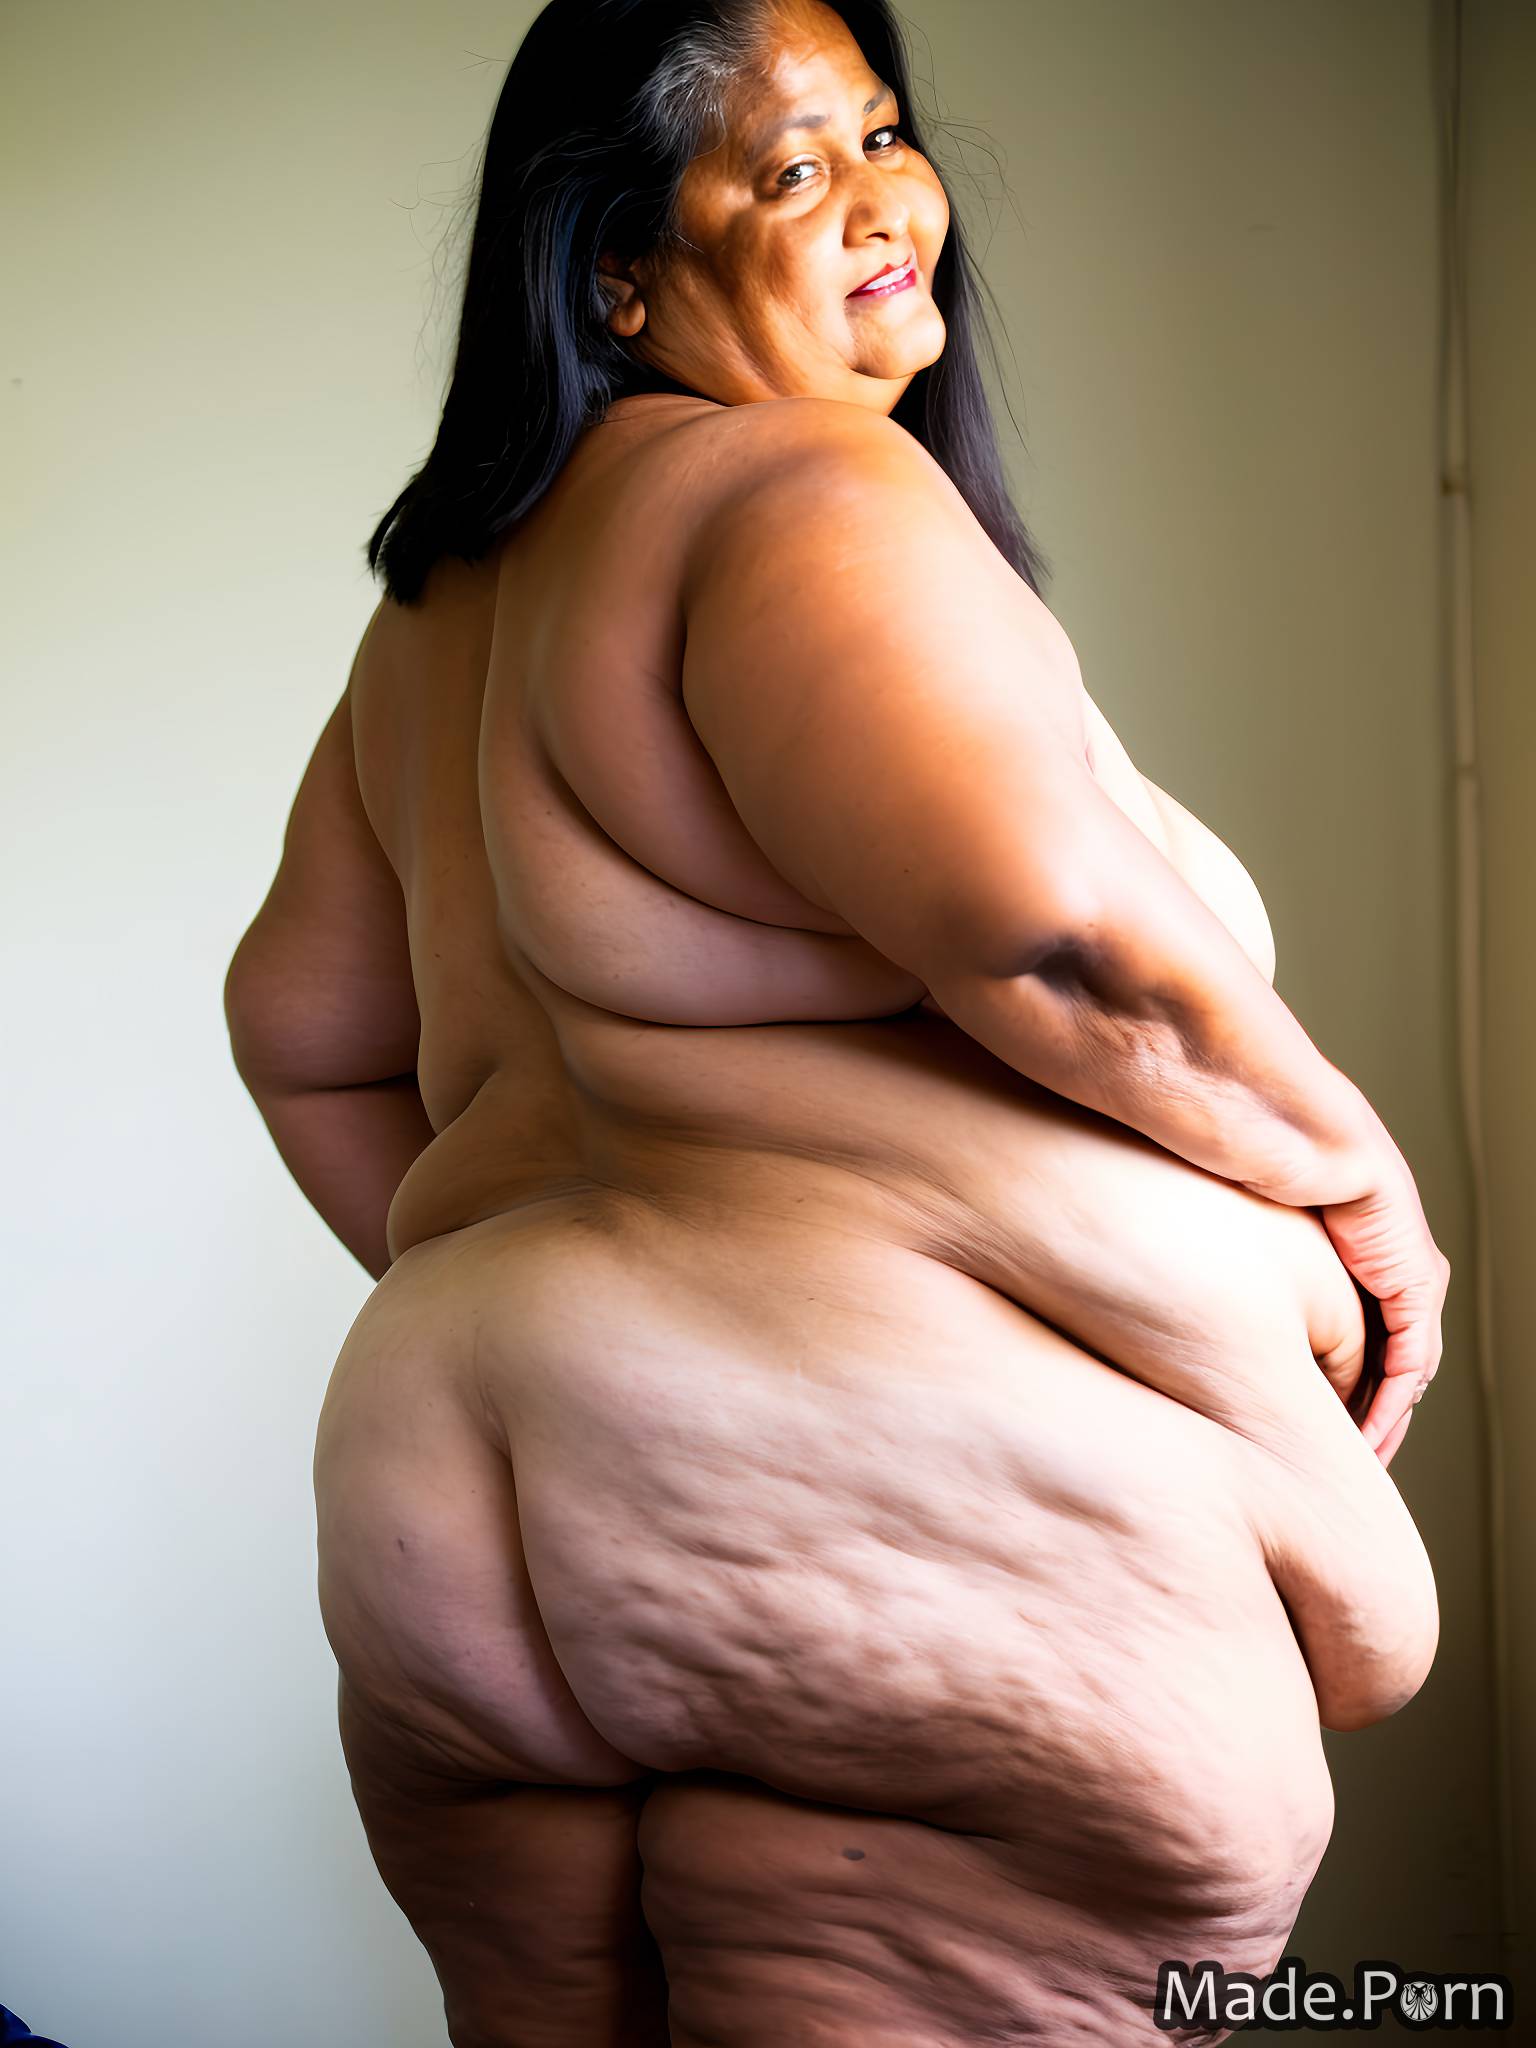 big hips big ass tanned skin photo looking at viewer bimbo woman